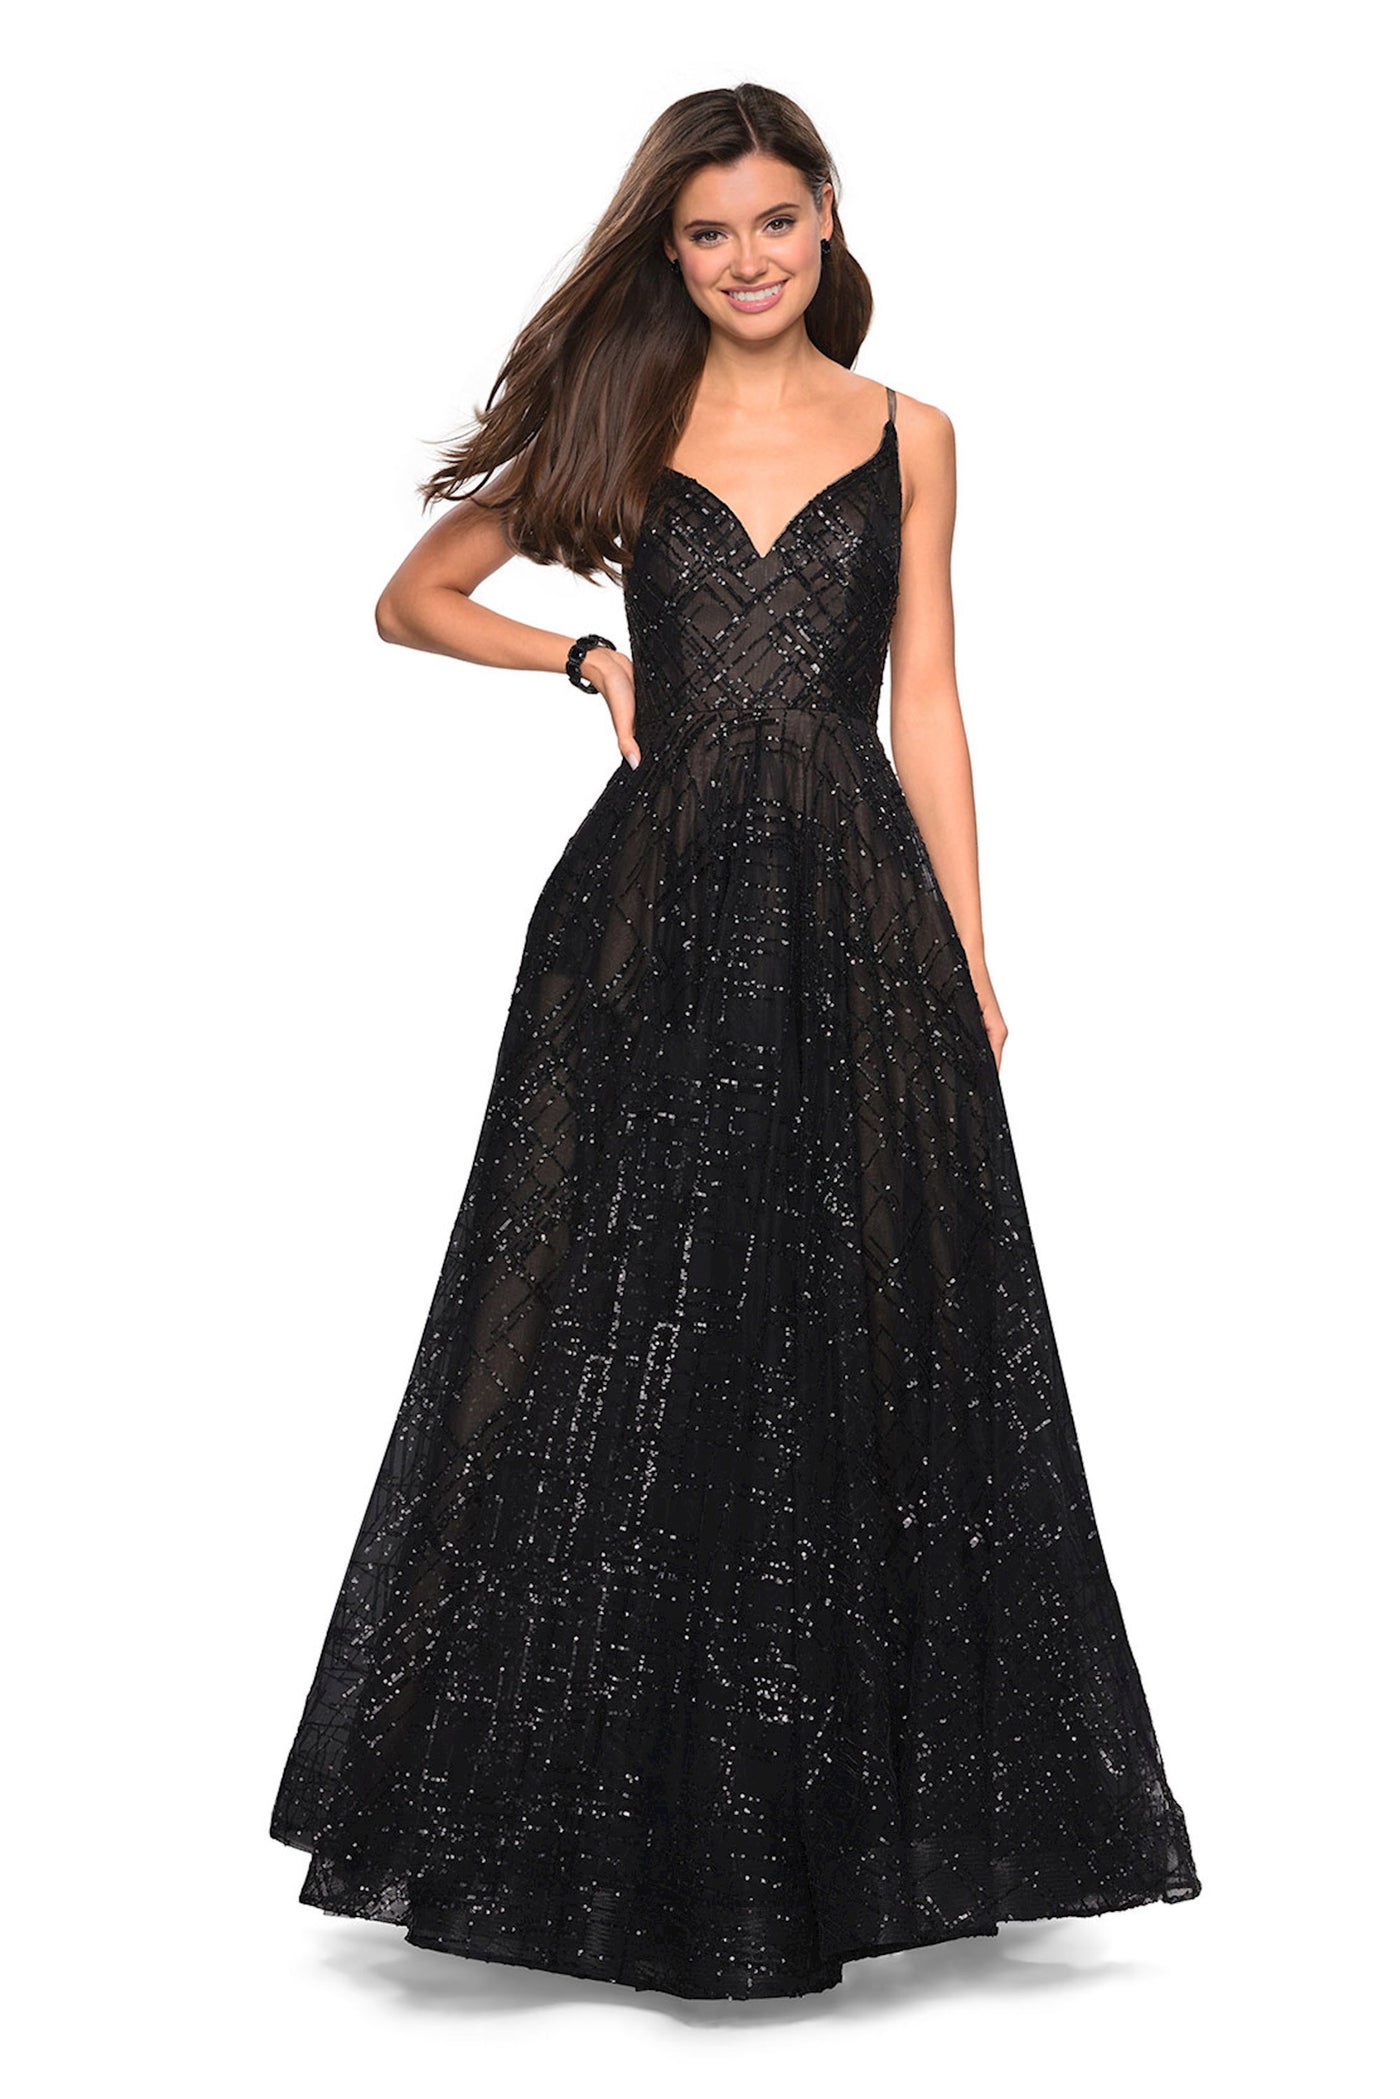 La Femme - Sparkling Sequin Sleeveless A-Line Dress 27199 In Black